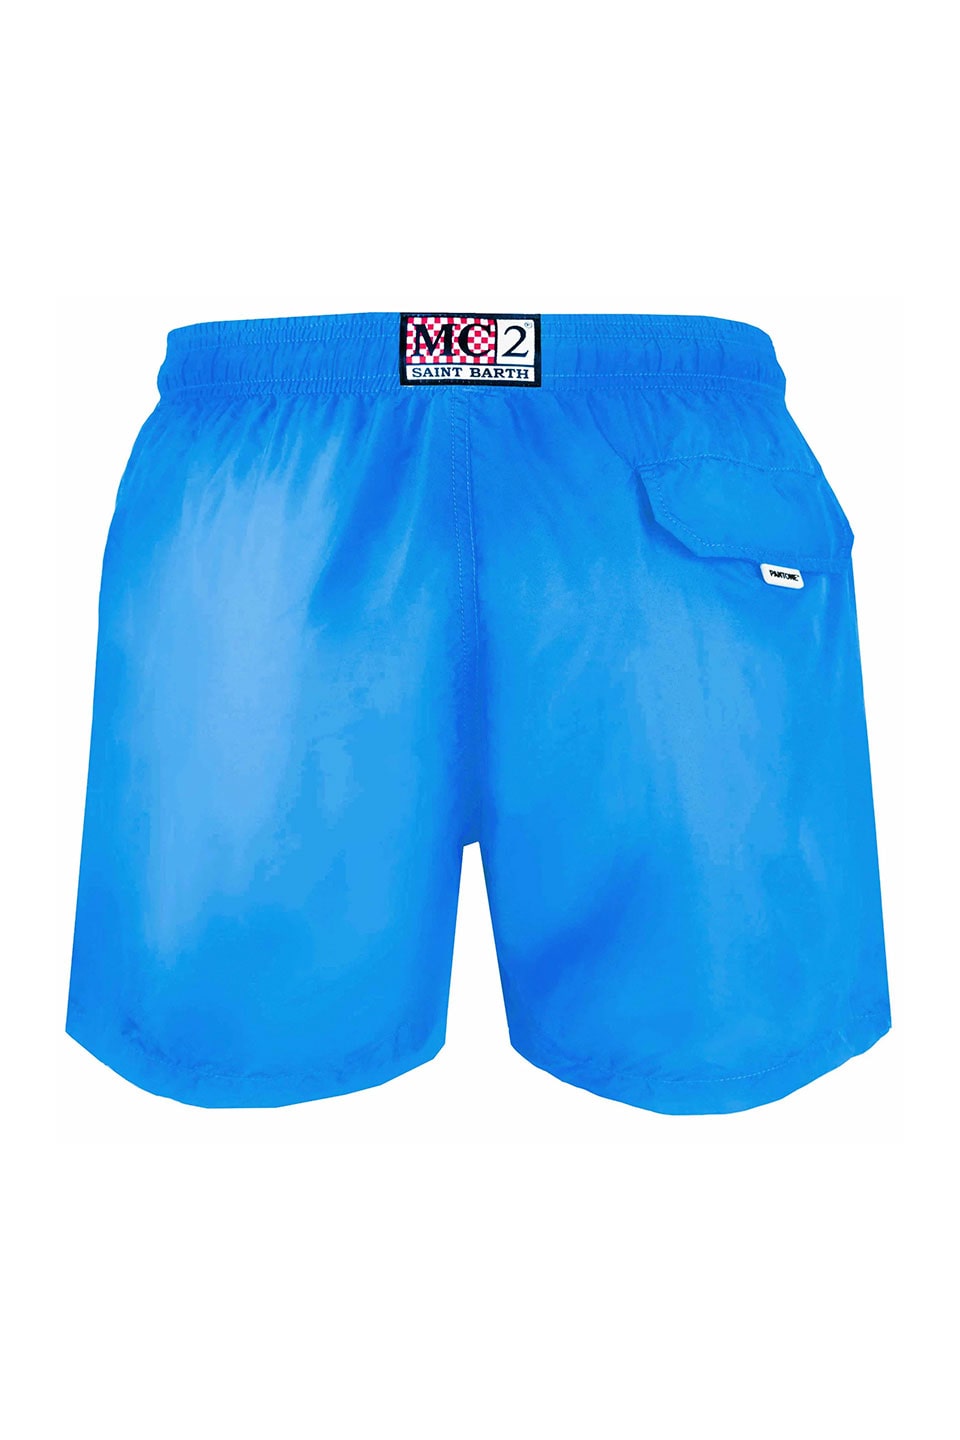 Thumbnail for Product gallery 8, MC saint barth light fabric man bluette swim shorts back